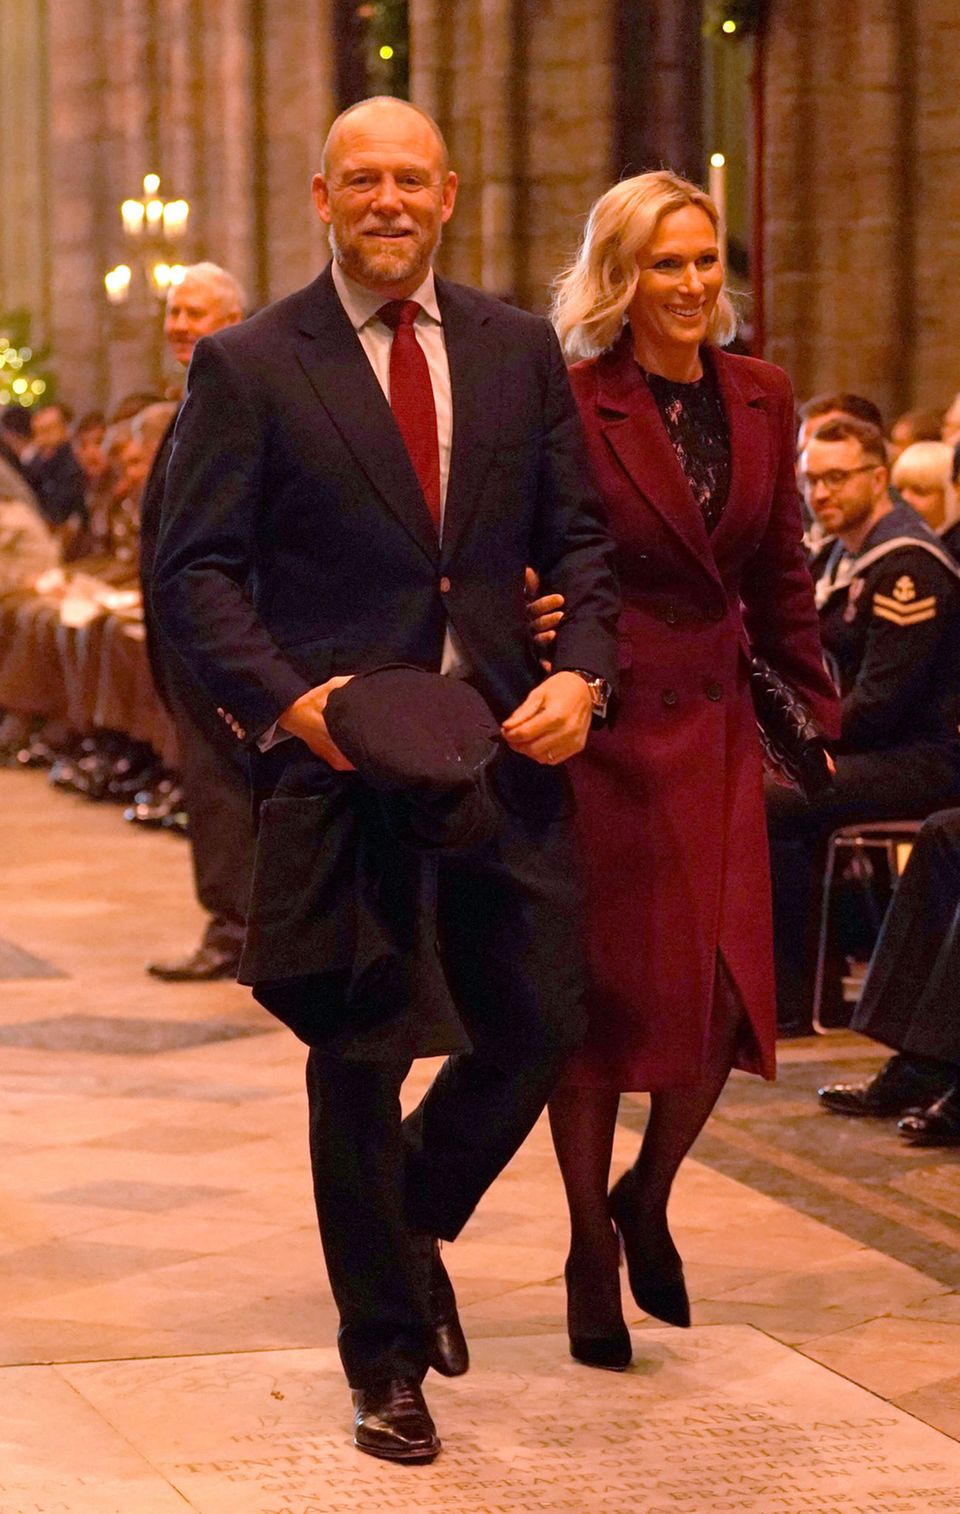 Mike and Zara Tindall bei der "Together at Christmas" Weihnachtszeremonie in der Westminster Abbey.